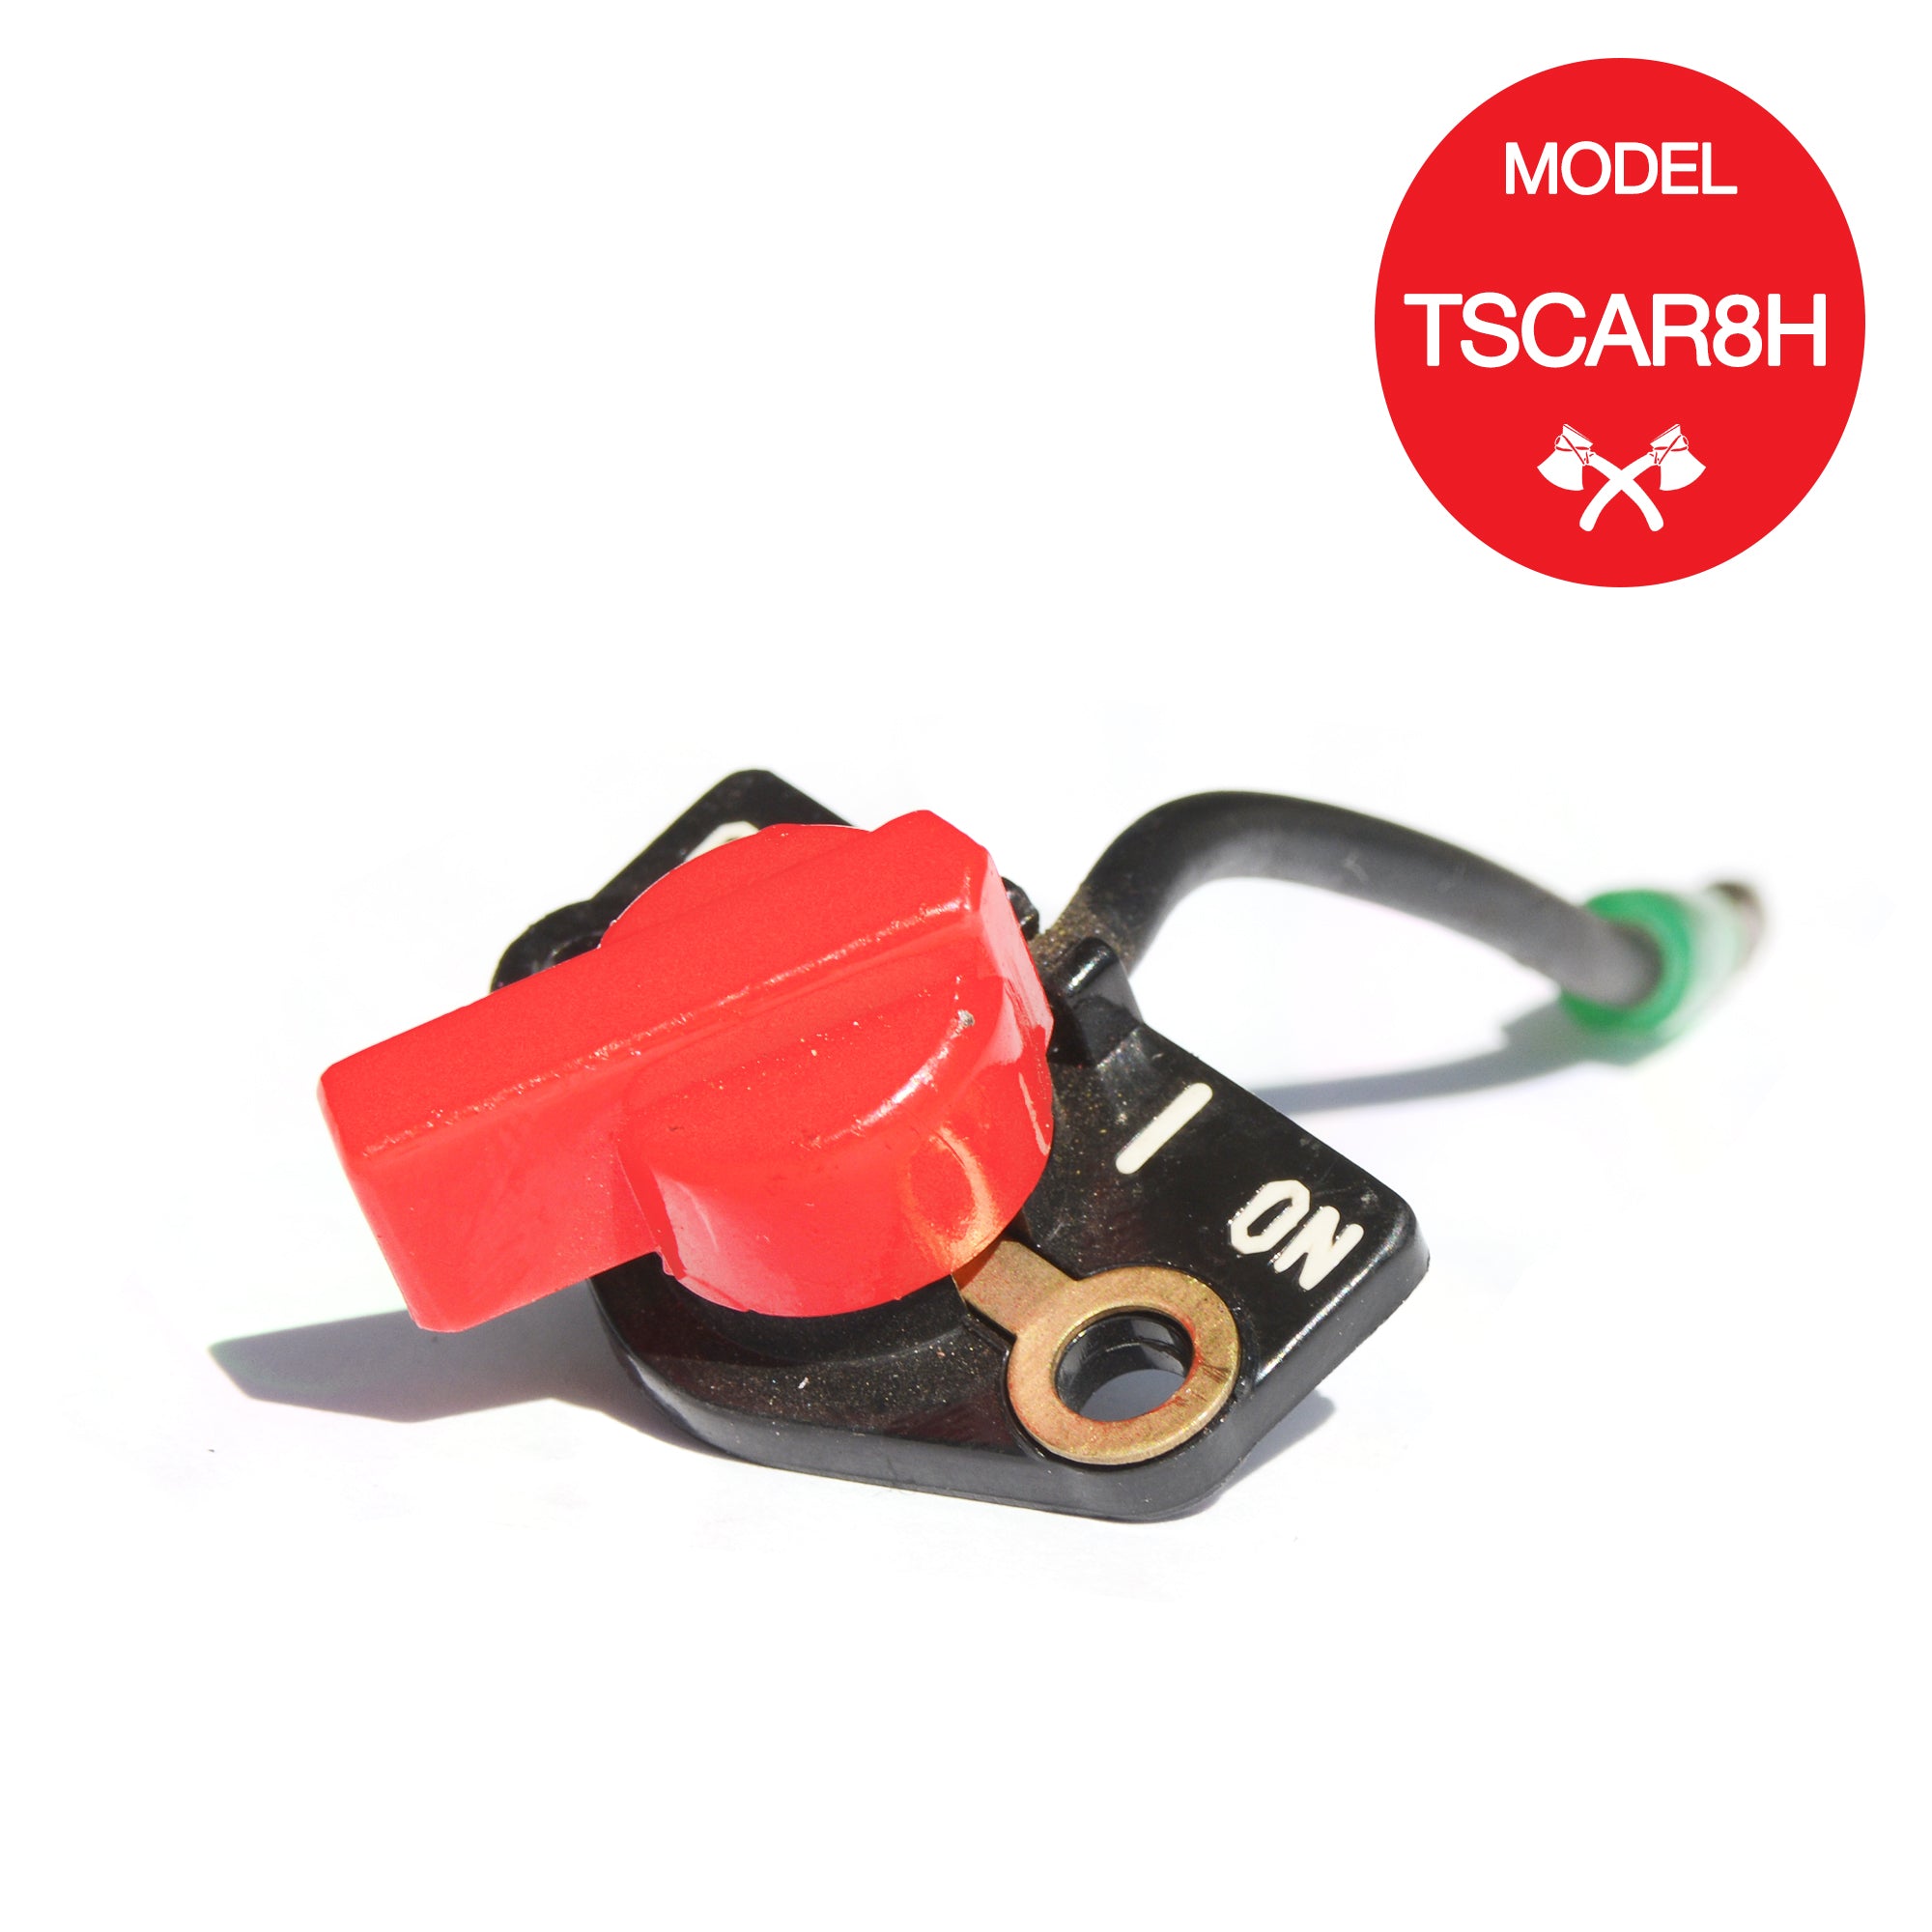 Engine Switch for TSCAR8H Concrete Scarifier - Tomahawk Power